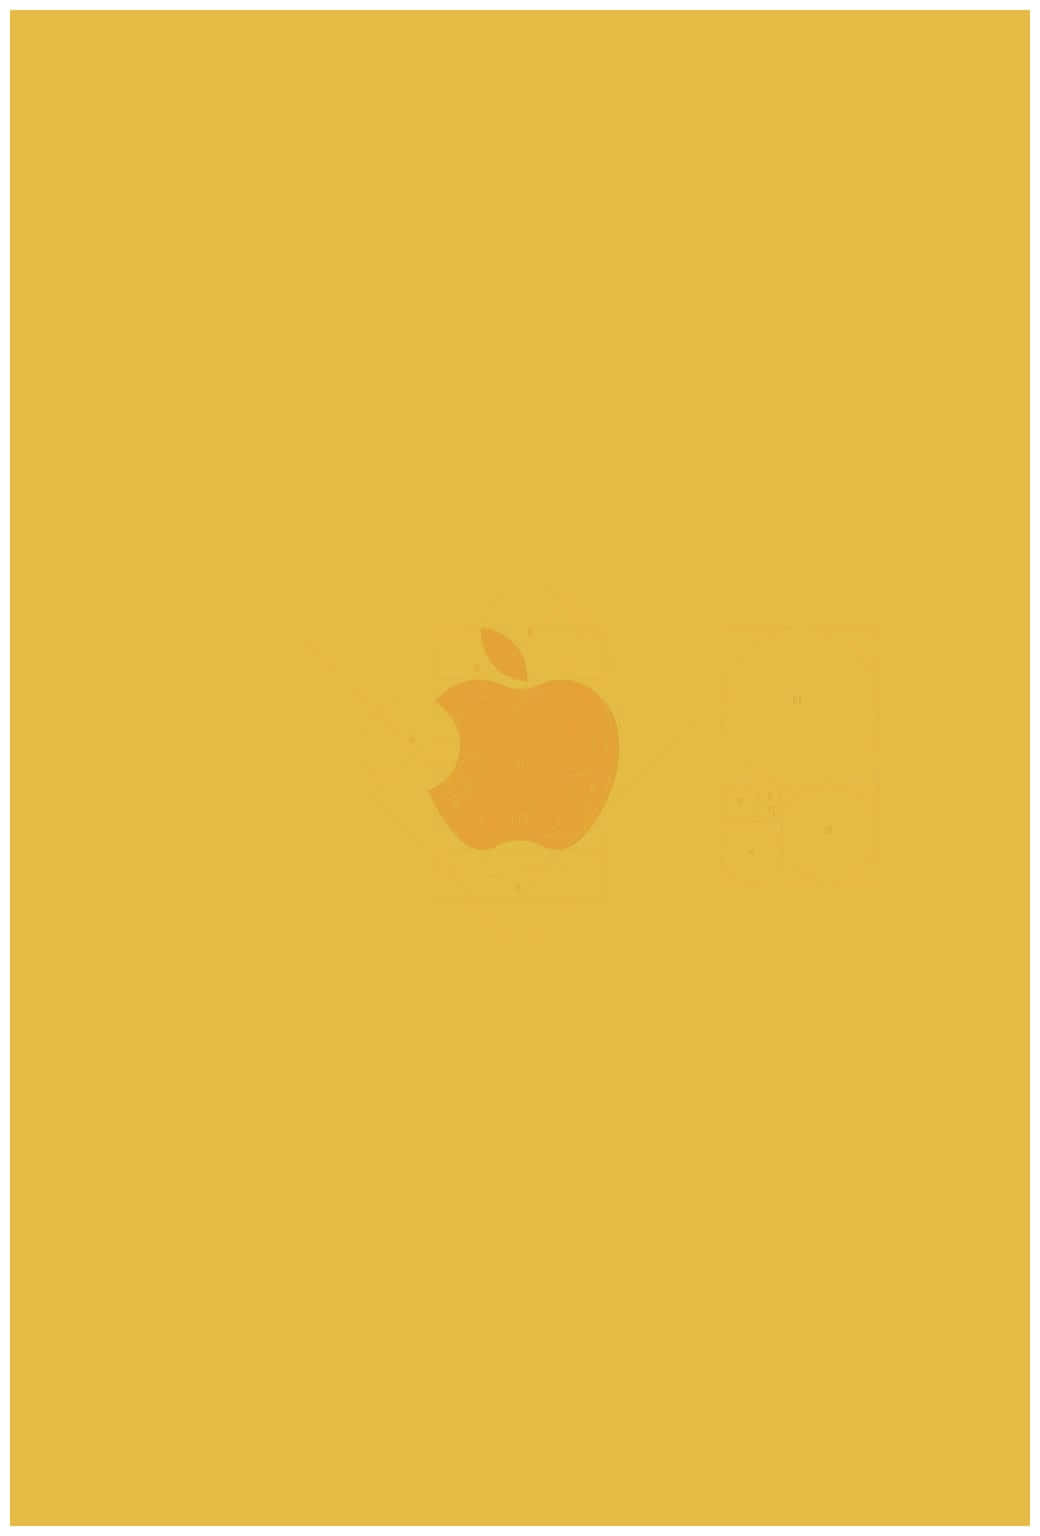 Sötpastellgul Apple-logotyp Som Bakgrundsbild På Dator Eller Mobiltelefon. Wallpaper